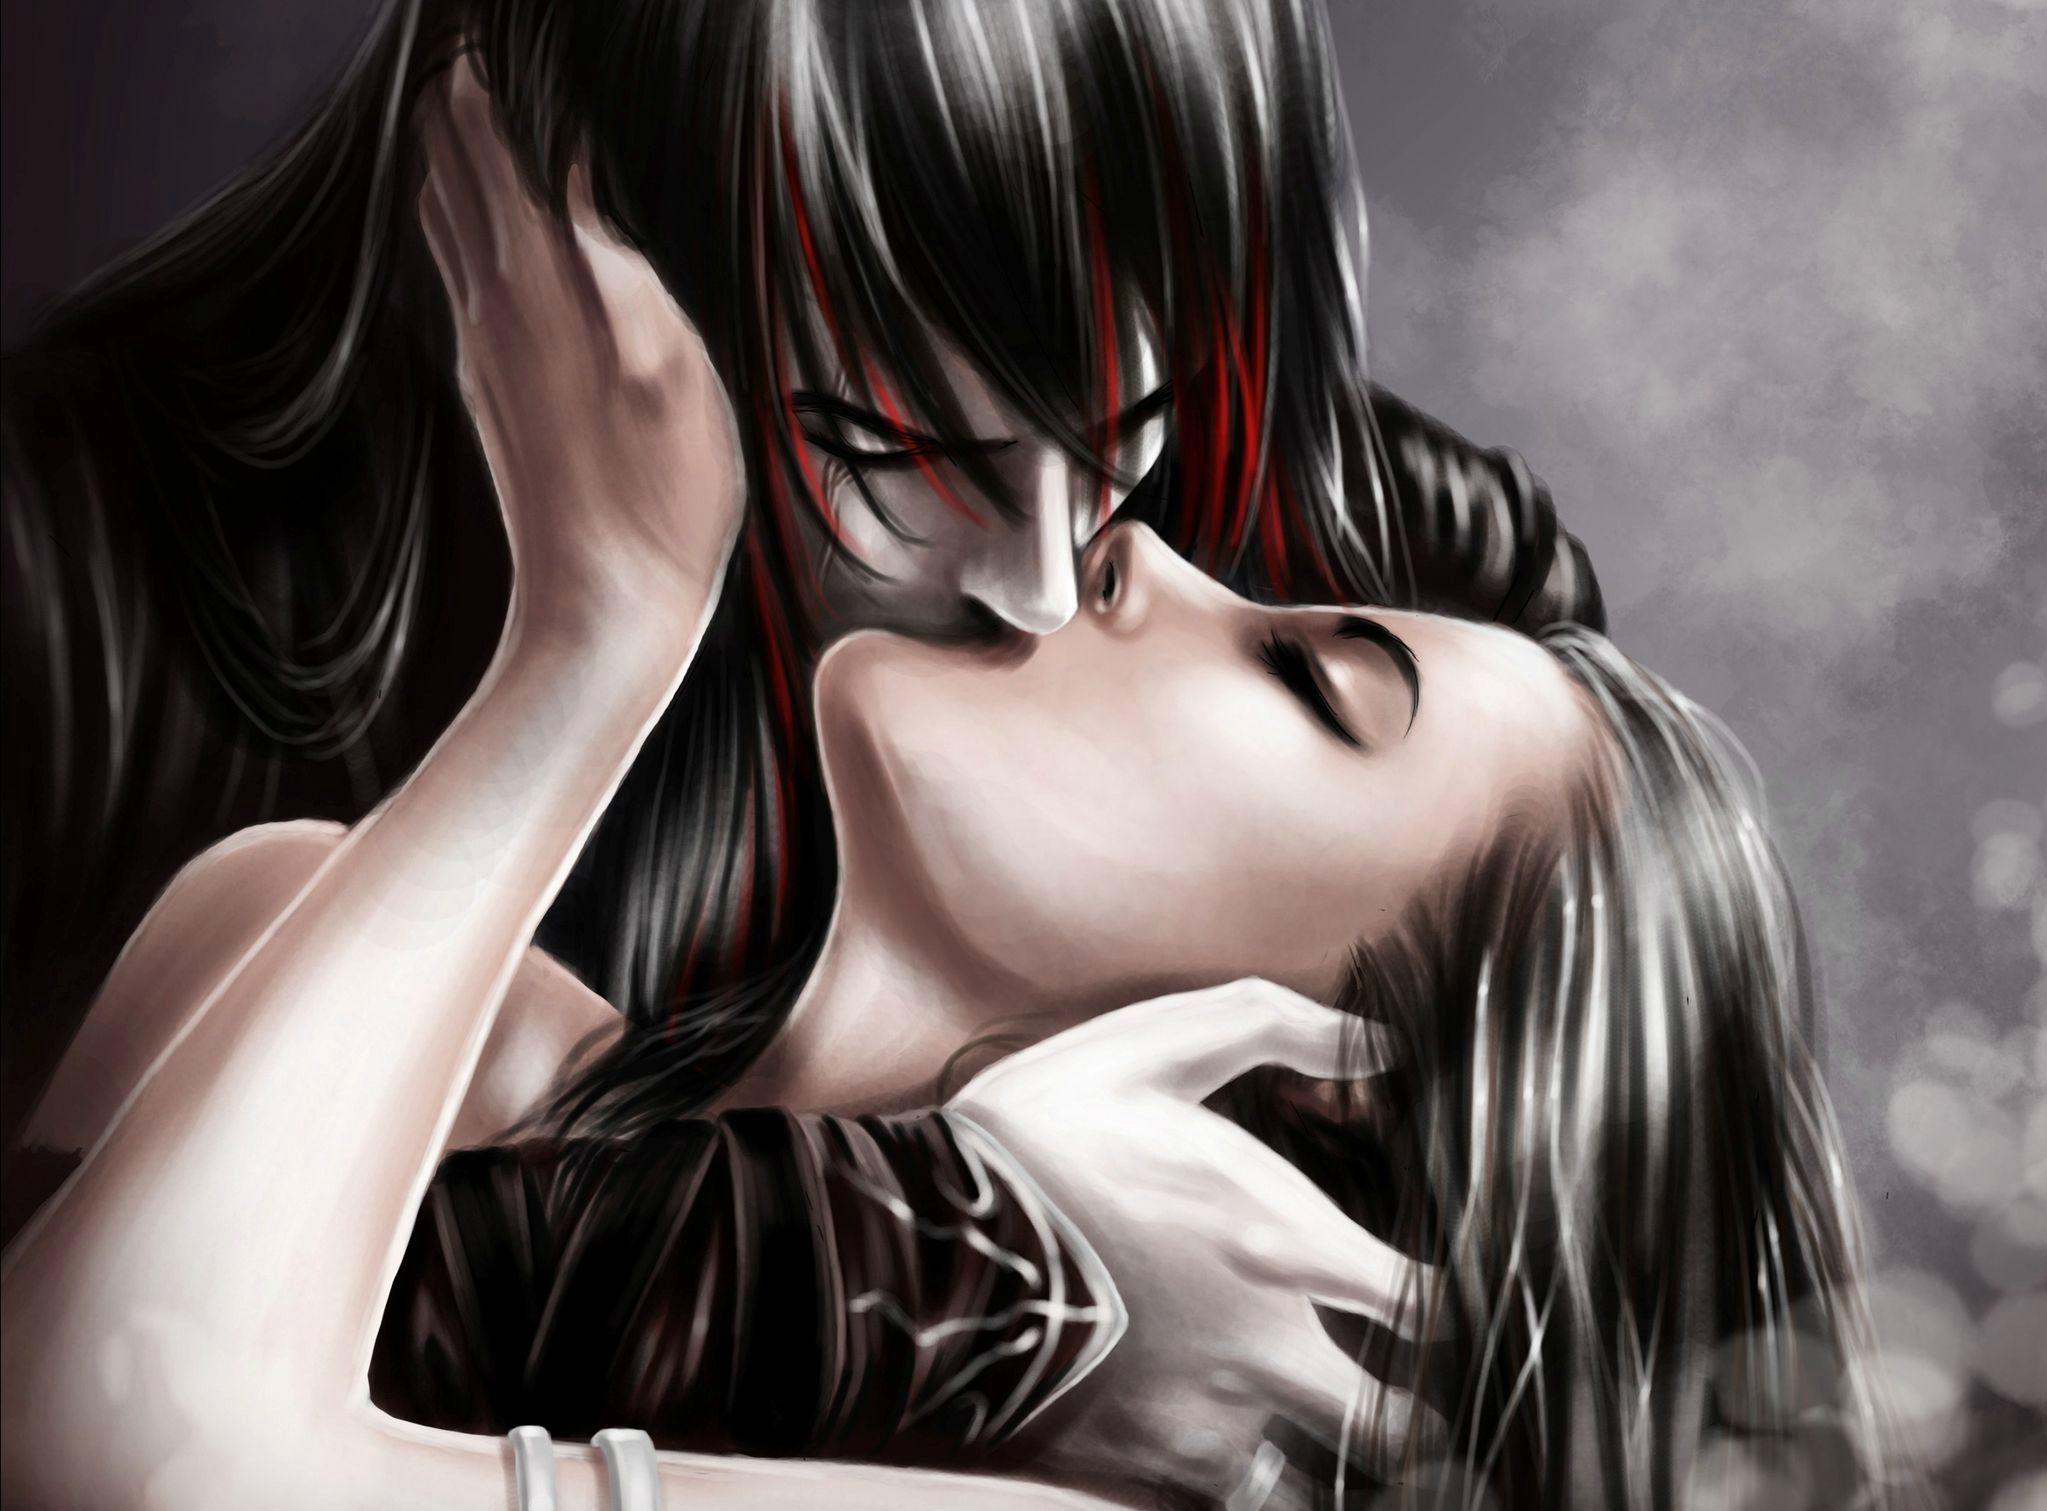 anime romance kiss scene - Google Search | Vampire knight, Vampire knight  yuki, Vampire